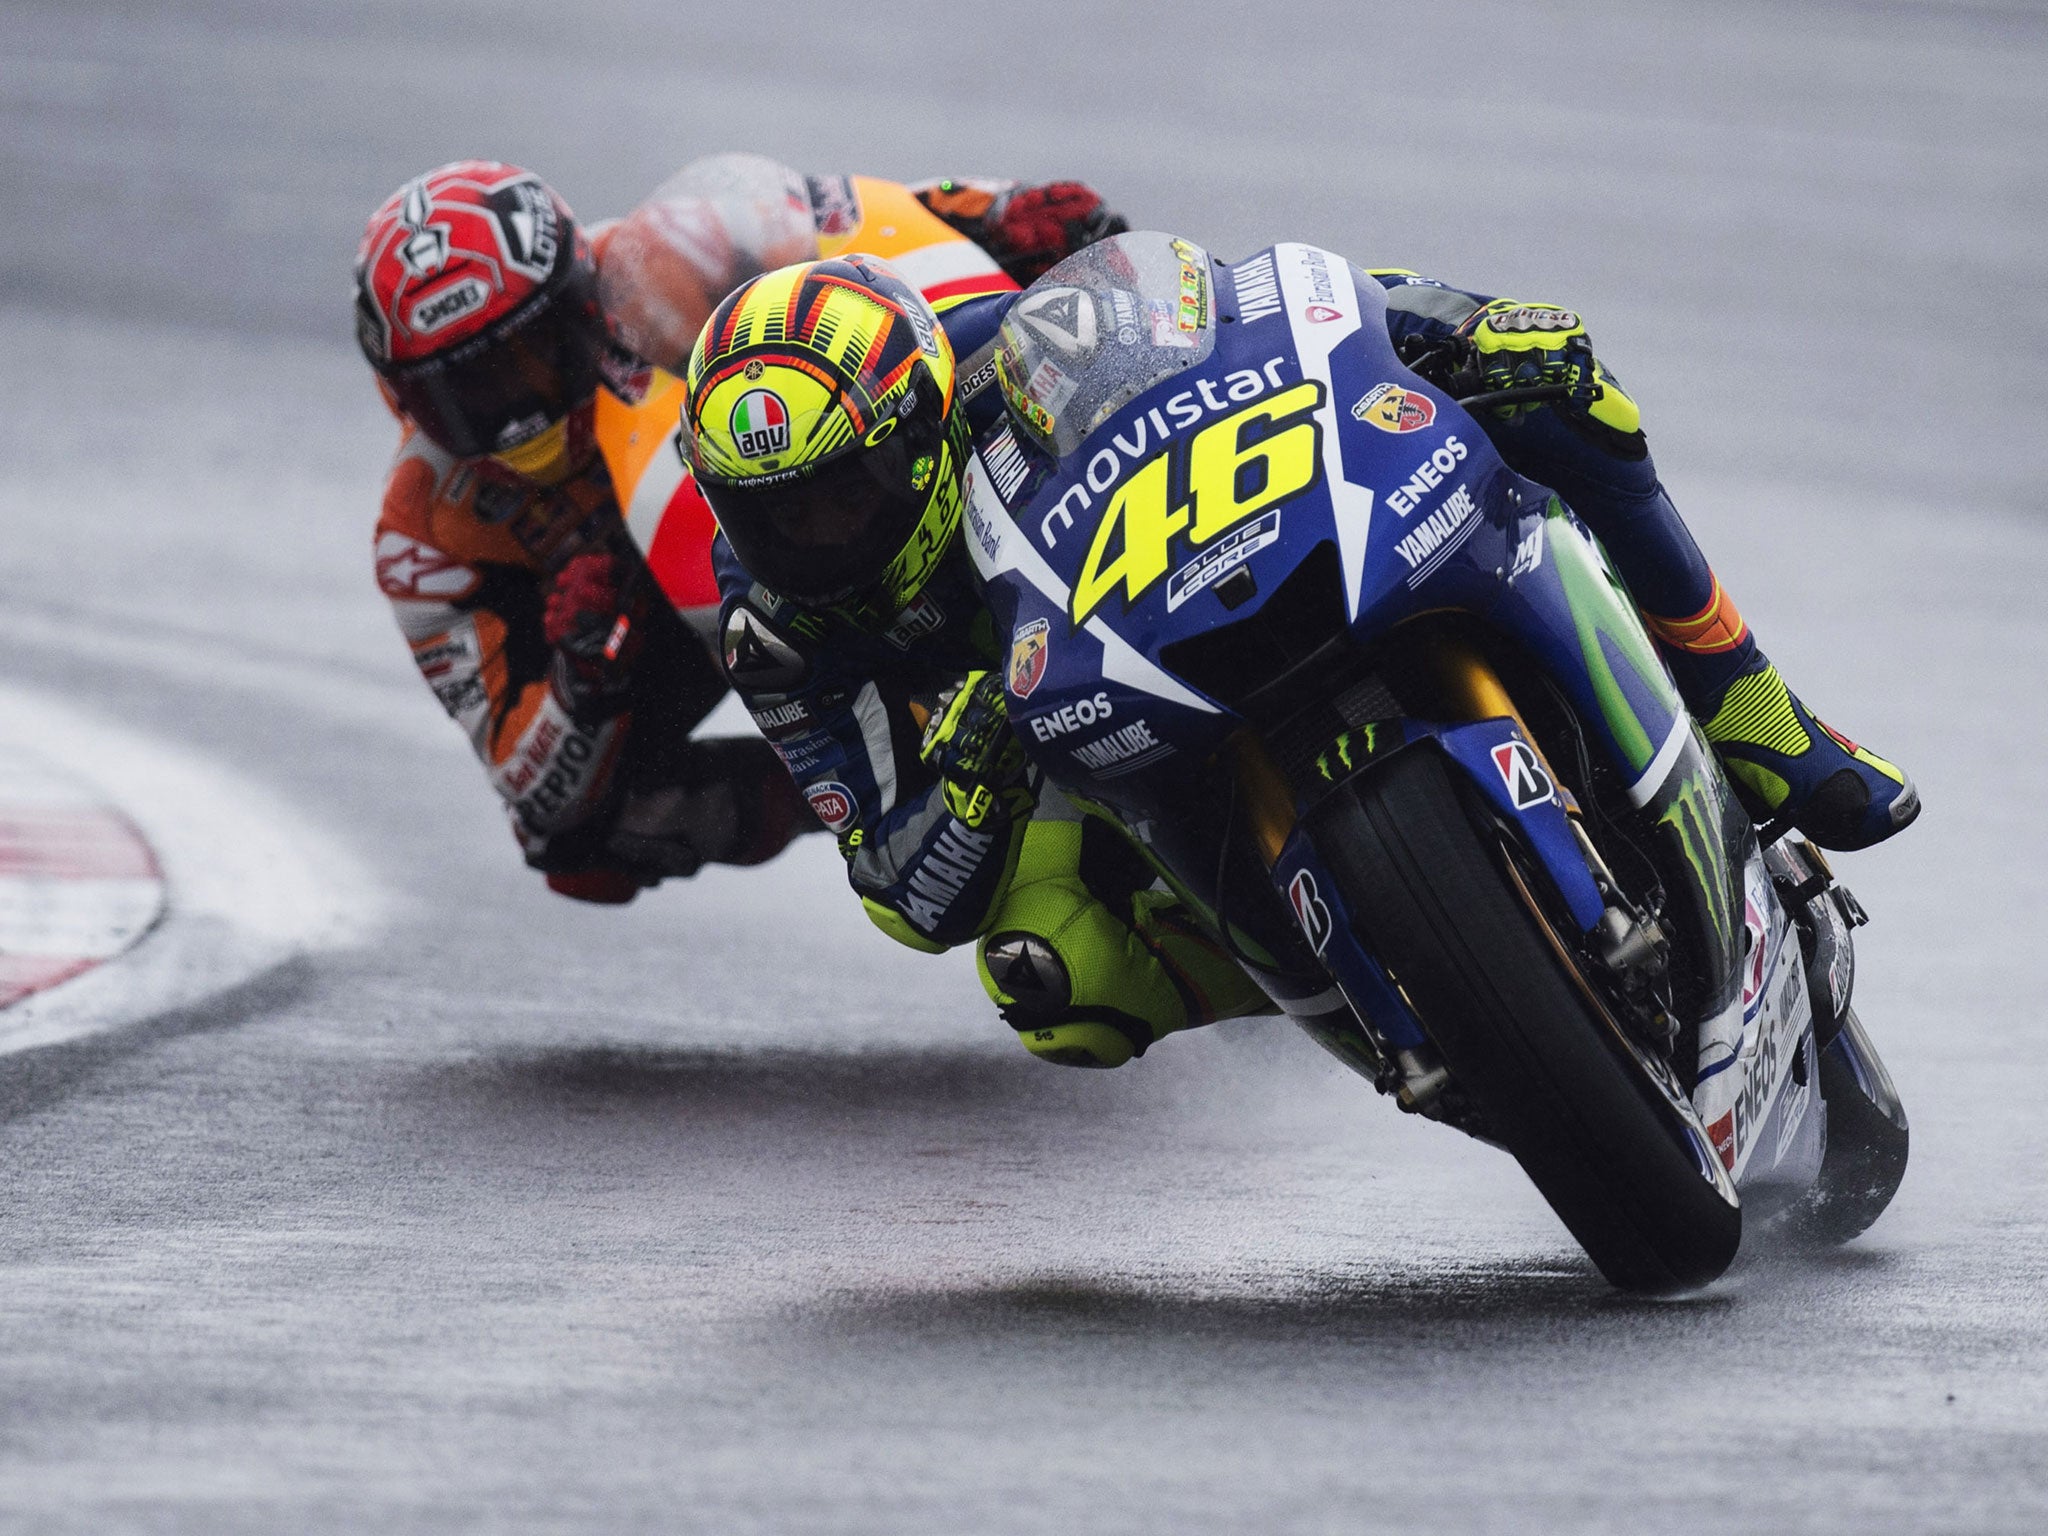 MotoGP British Grand Prix 2015: Valentino Rossi storms to victory